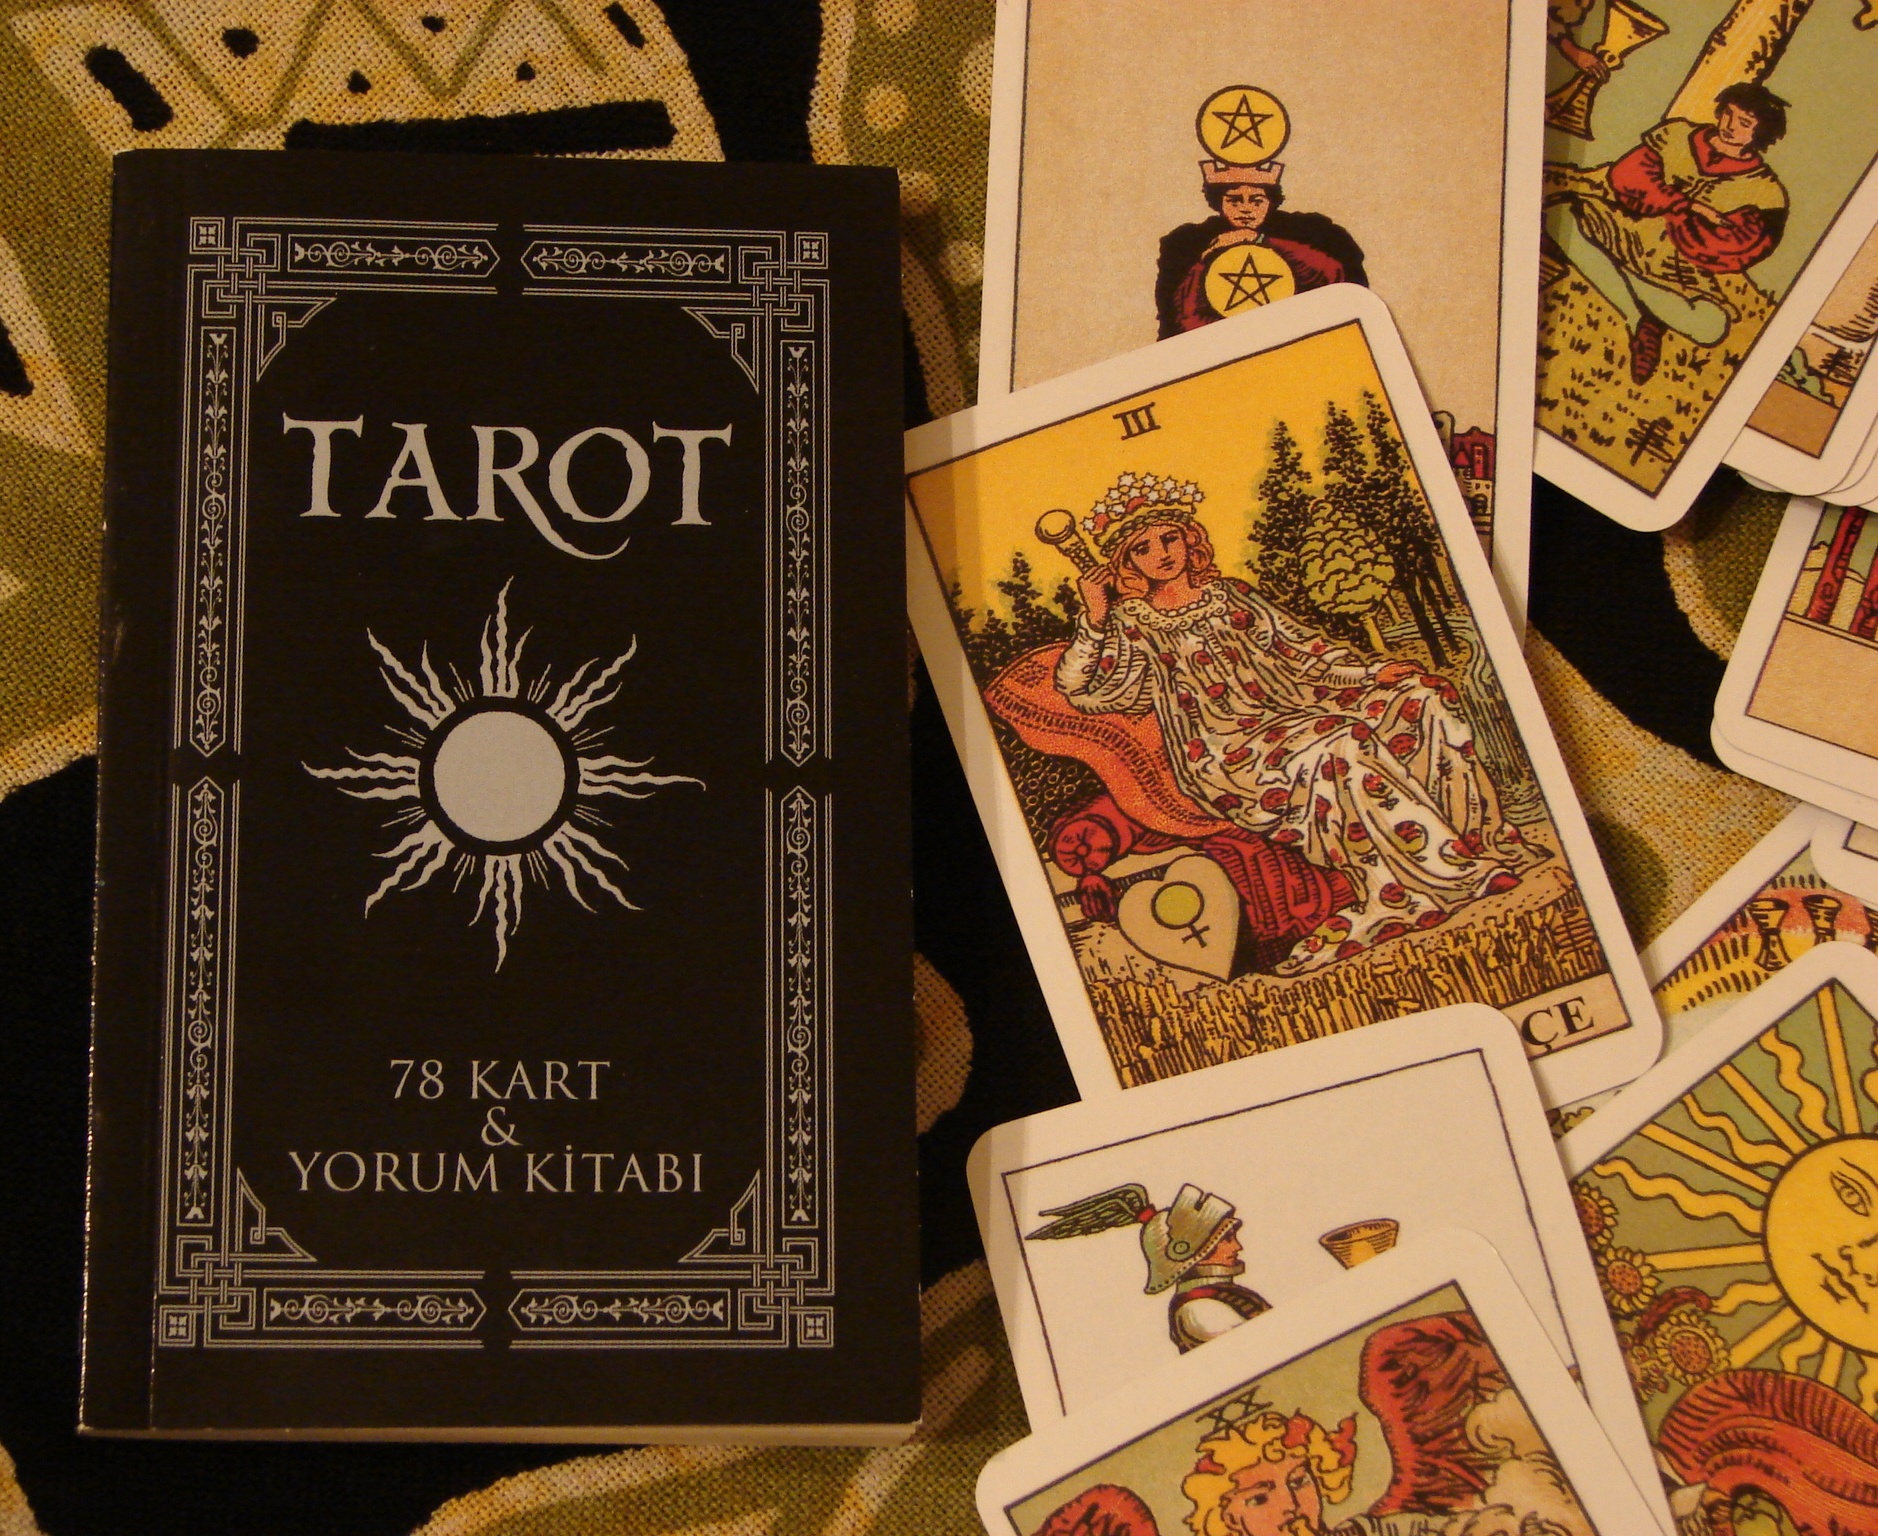 Купить карты таро магазине. Карты "Таро". Упаковка карт Таро. Карты Таро упаковка. Карты Таро на русском.